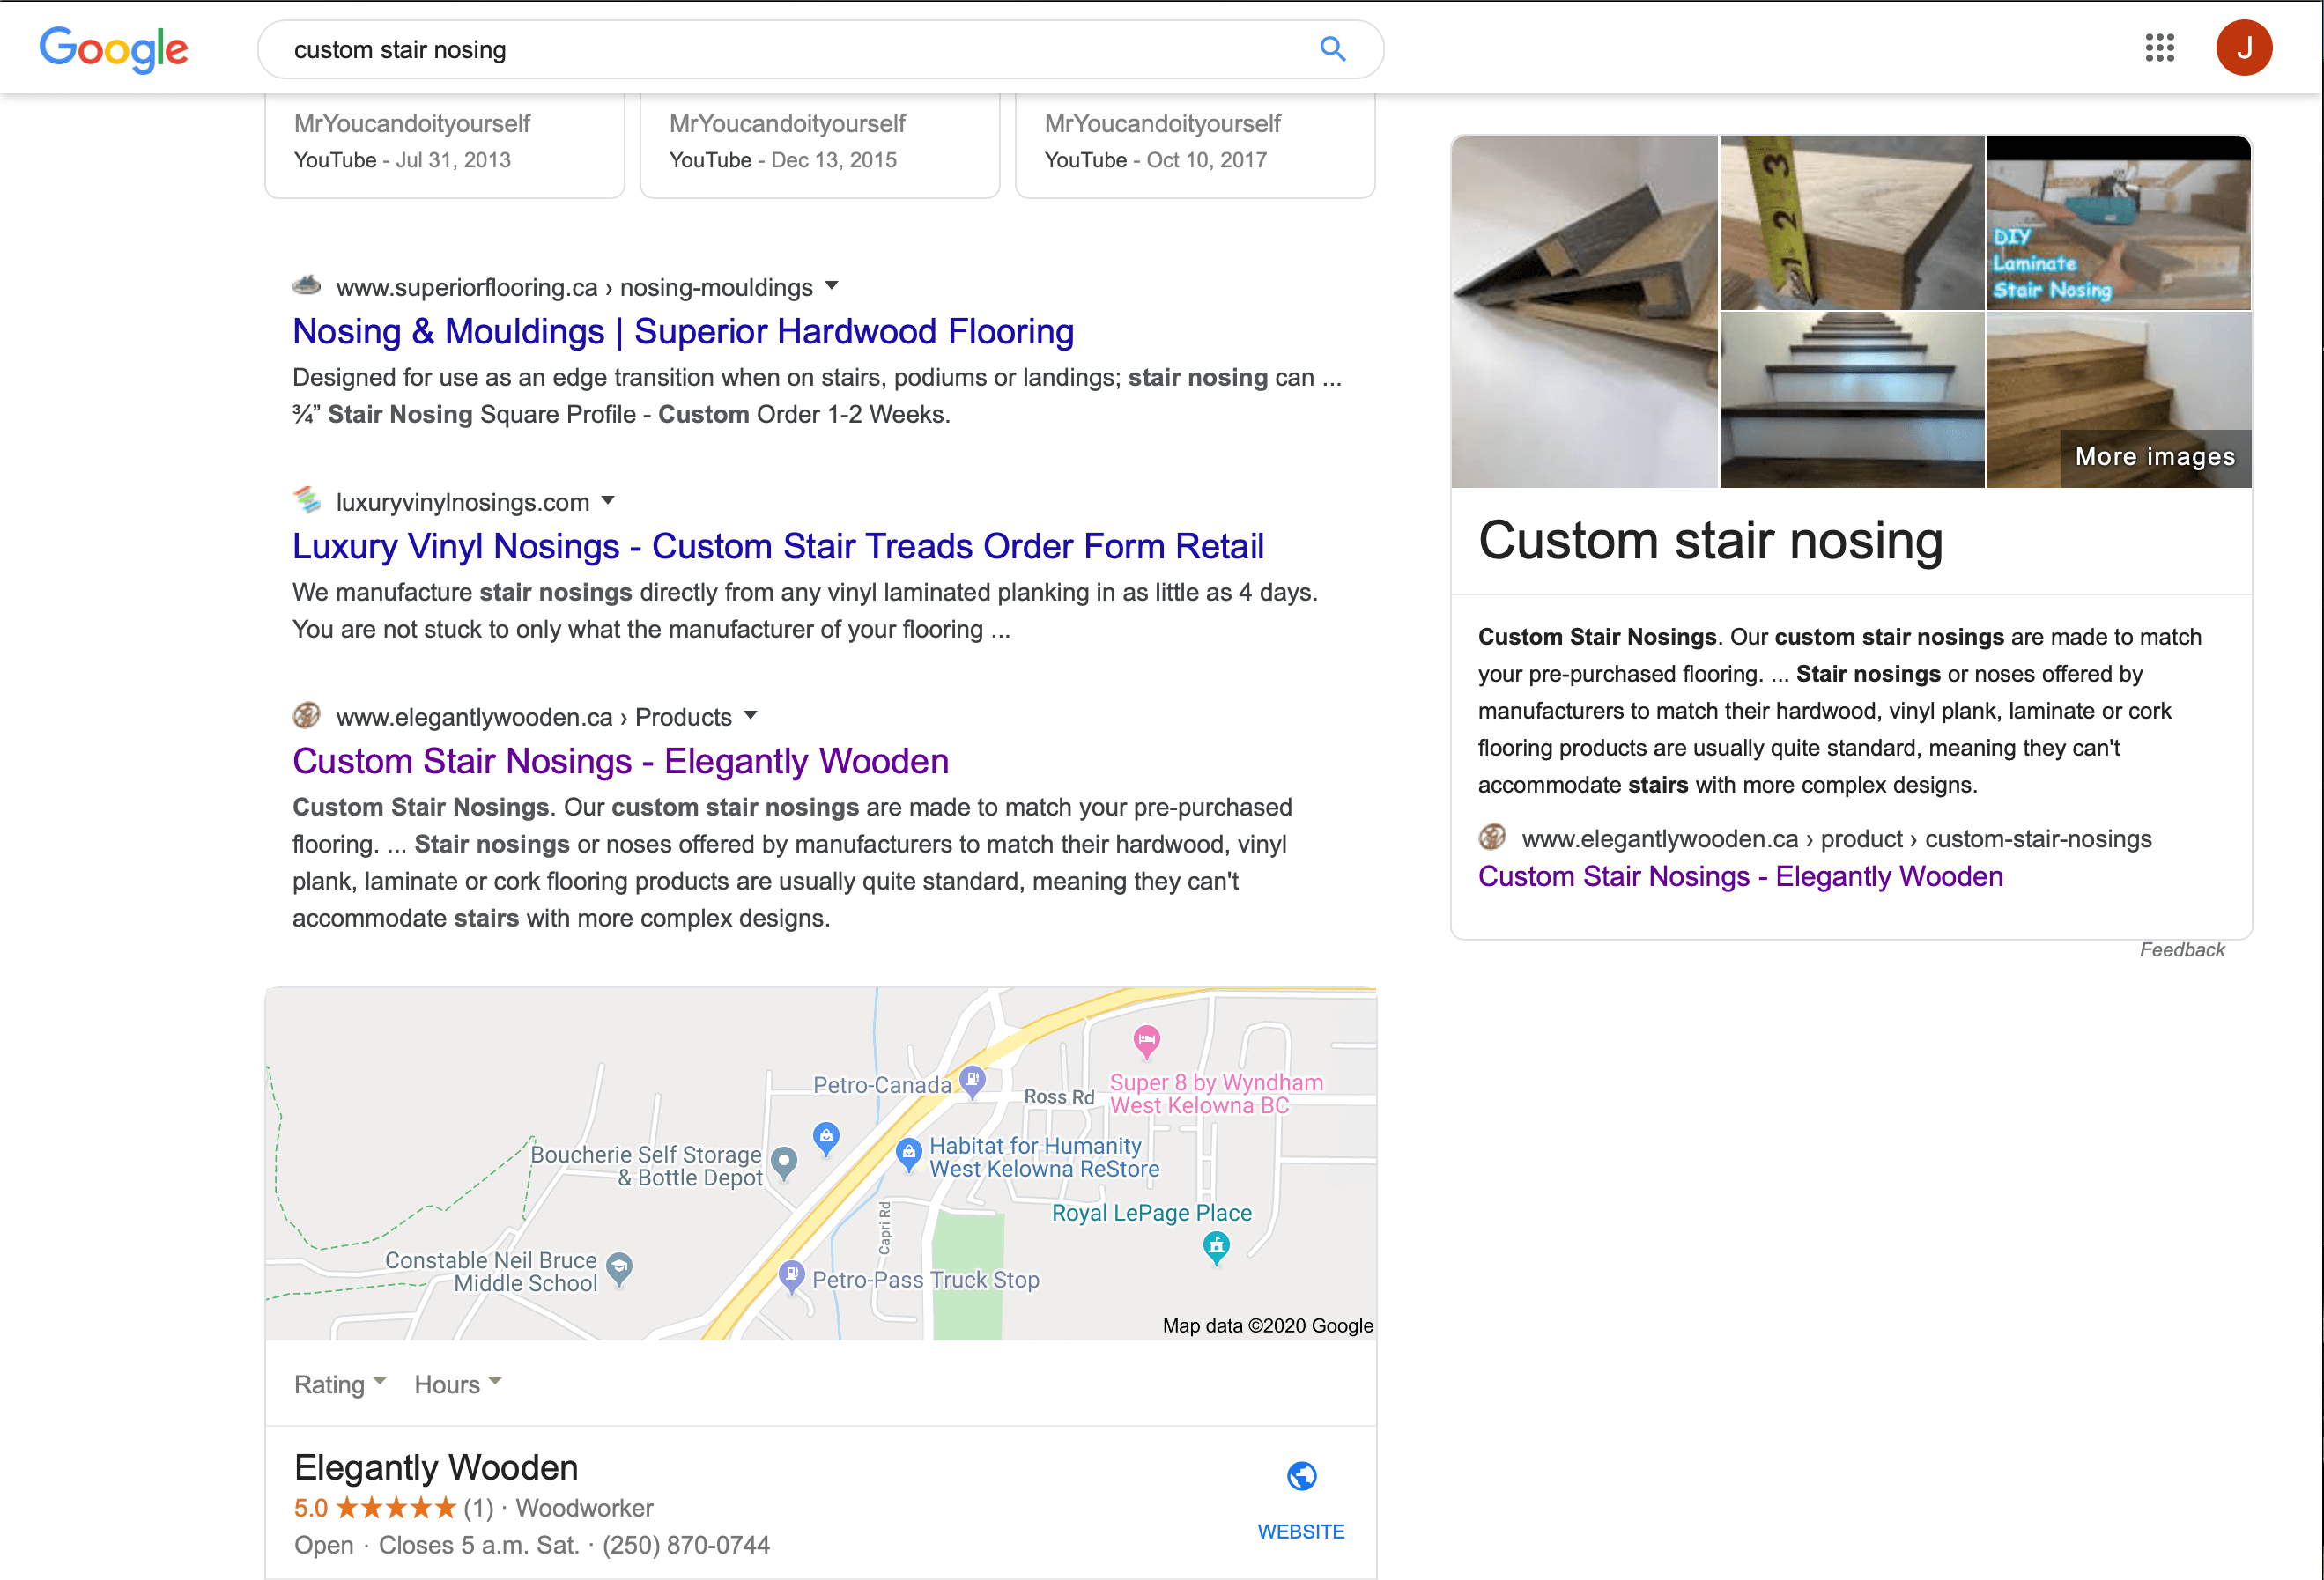 Elegantly Wooden's Google search engine ranking.